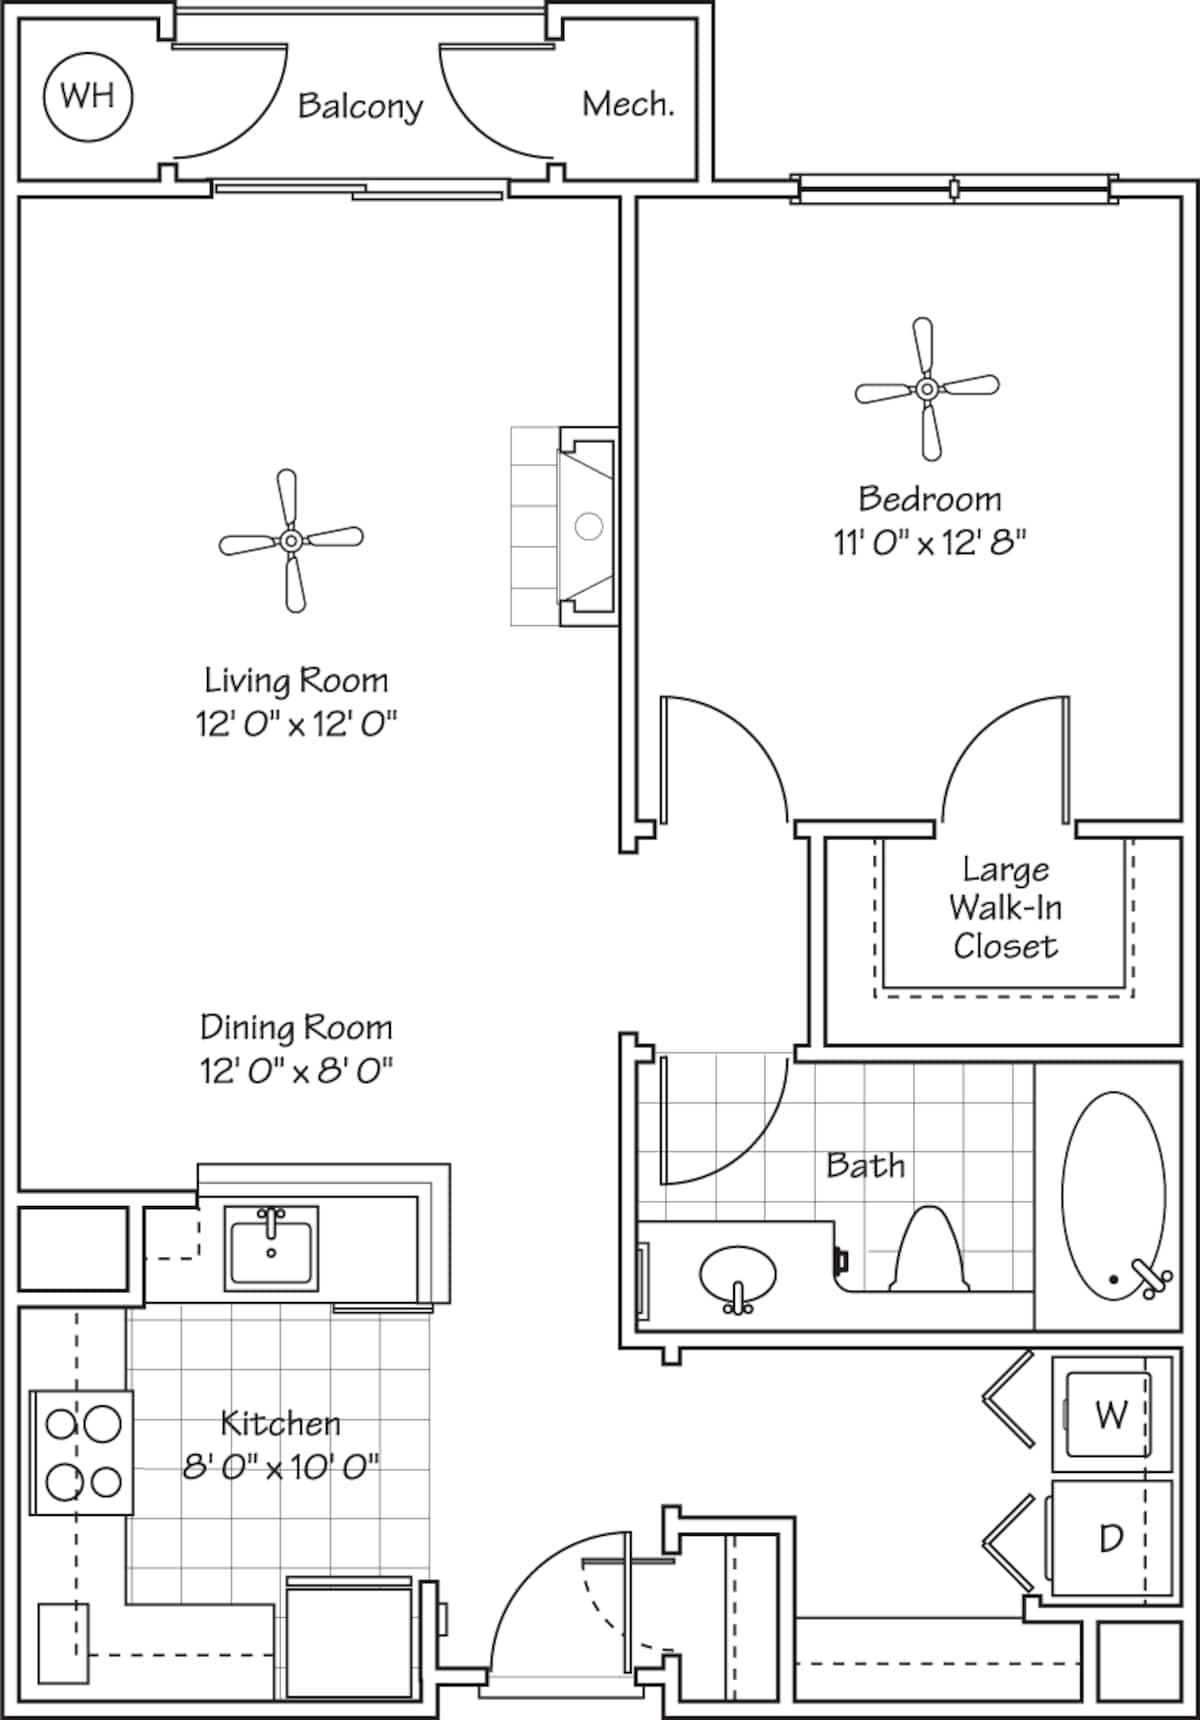 Floorplan diagram for The Allison, showing 1 bedroom